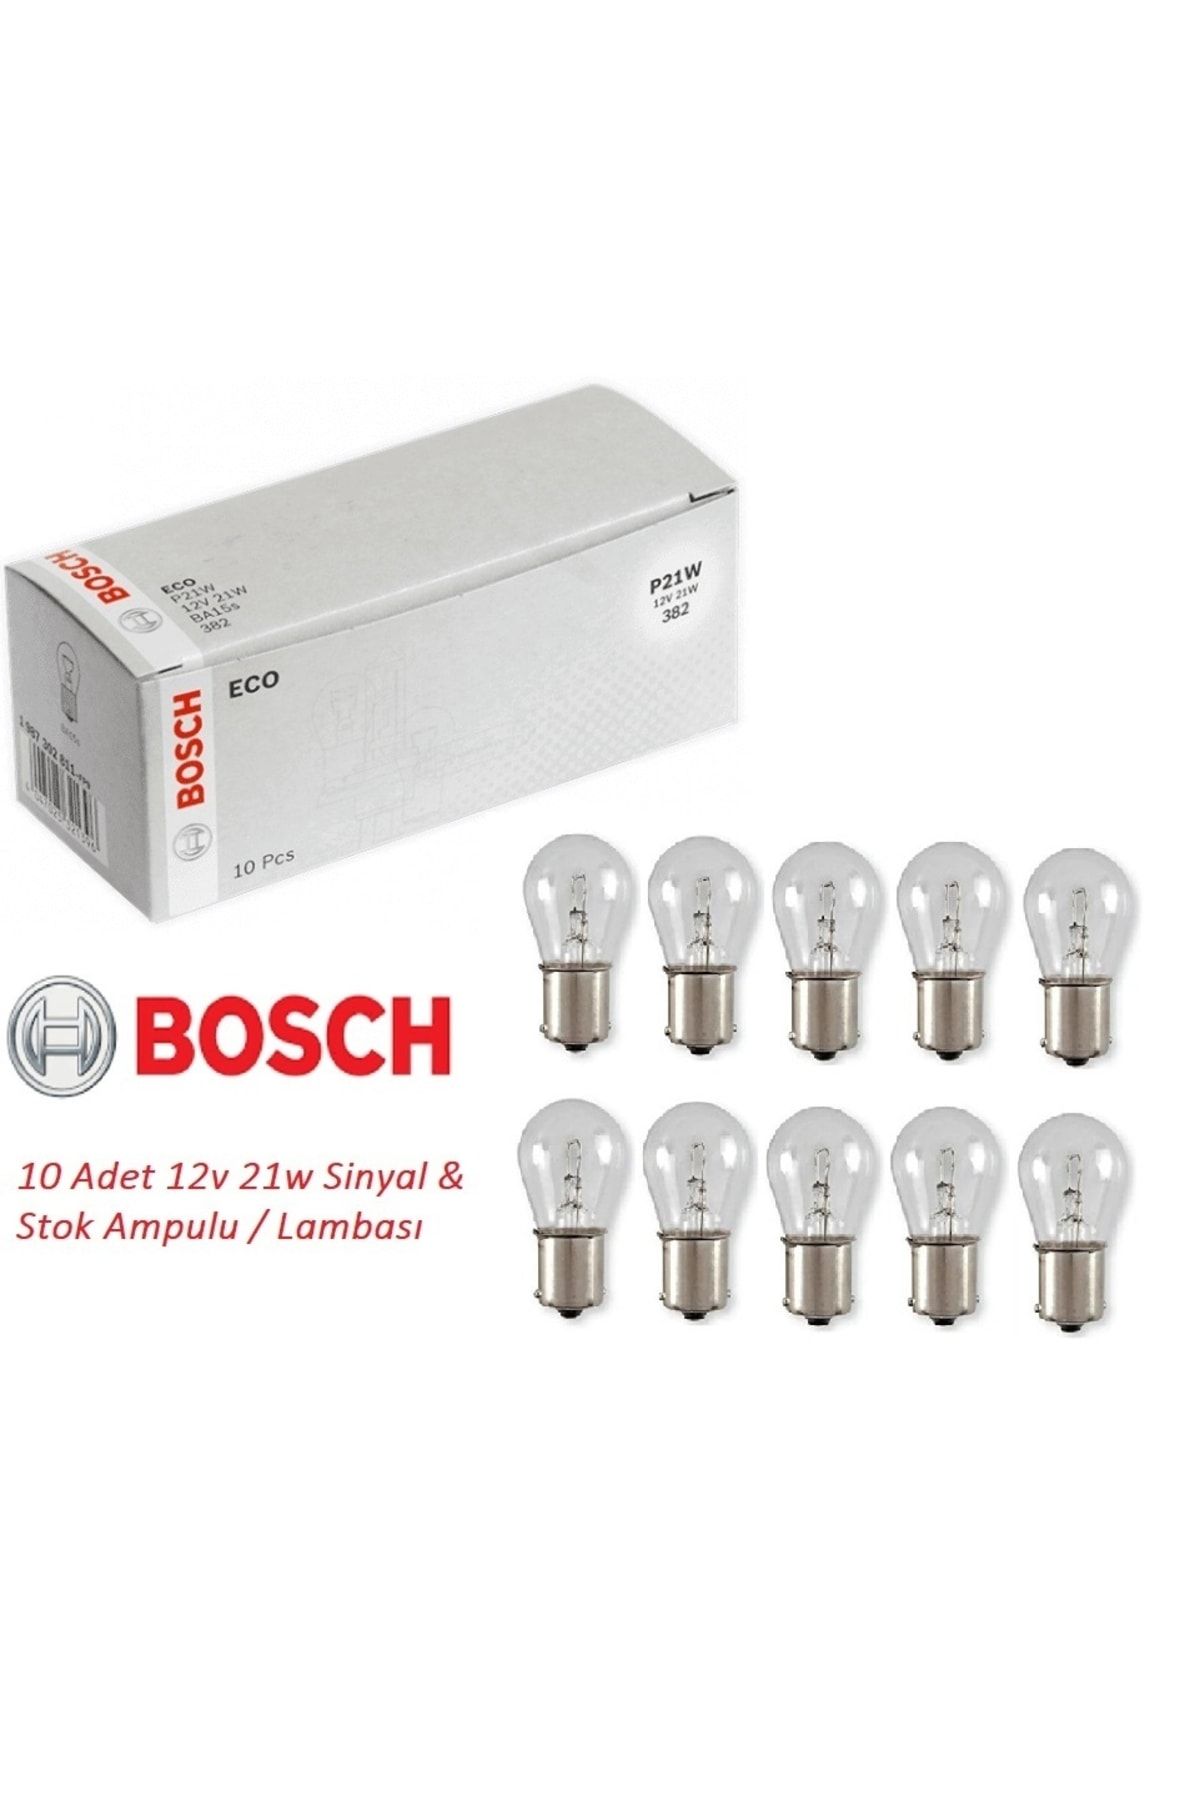 Bosch 12 Volt 21 Watt Sinyal Stop Ampulu Lambası 93 Tek Duy Ampul Takımı 10 Adet